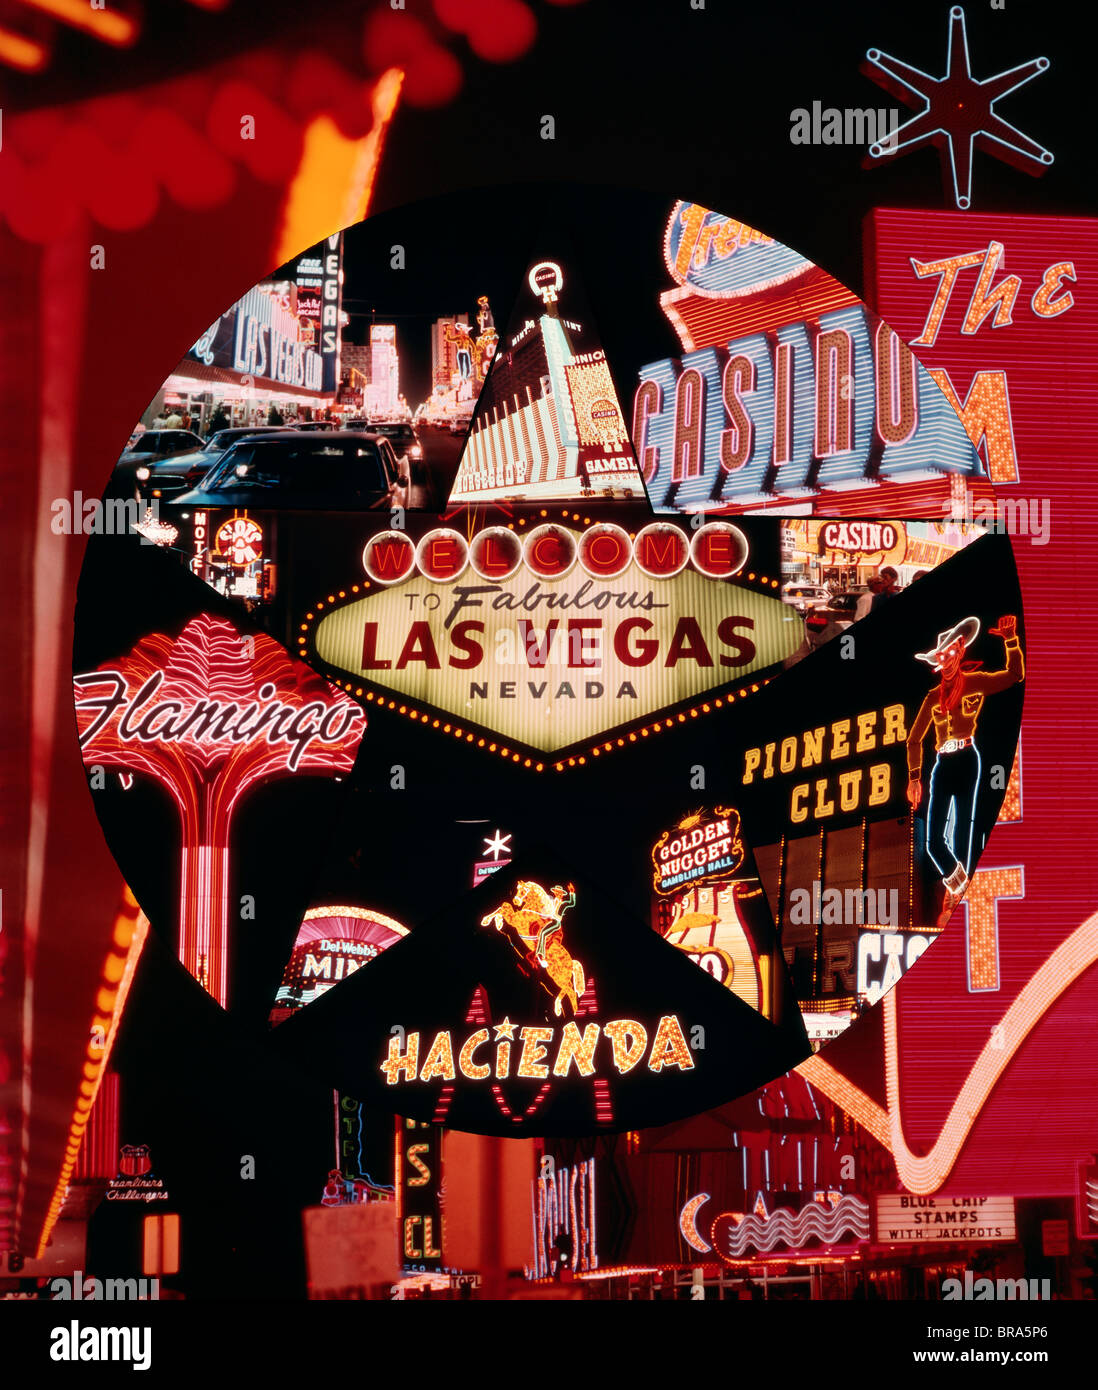 Vintage Las Vegas Welcome Sign in Las Vegas, Nevada Stock Photo - Alamy